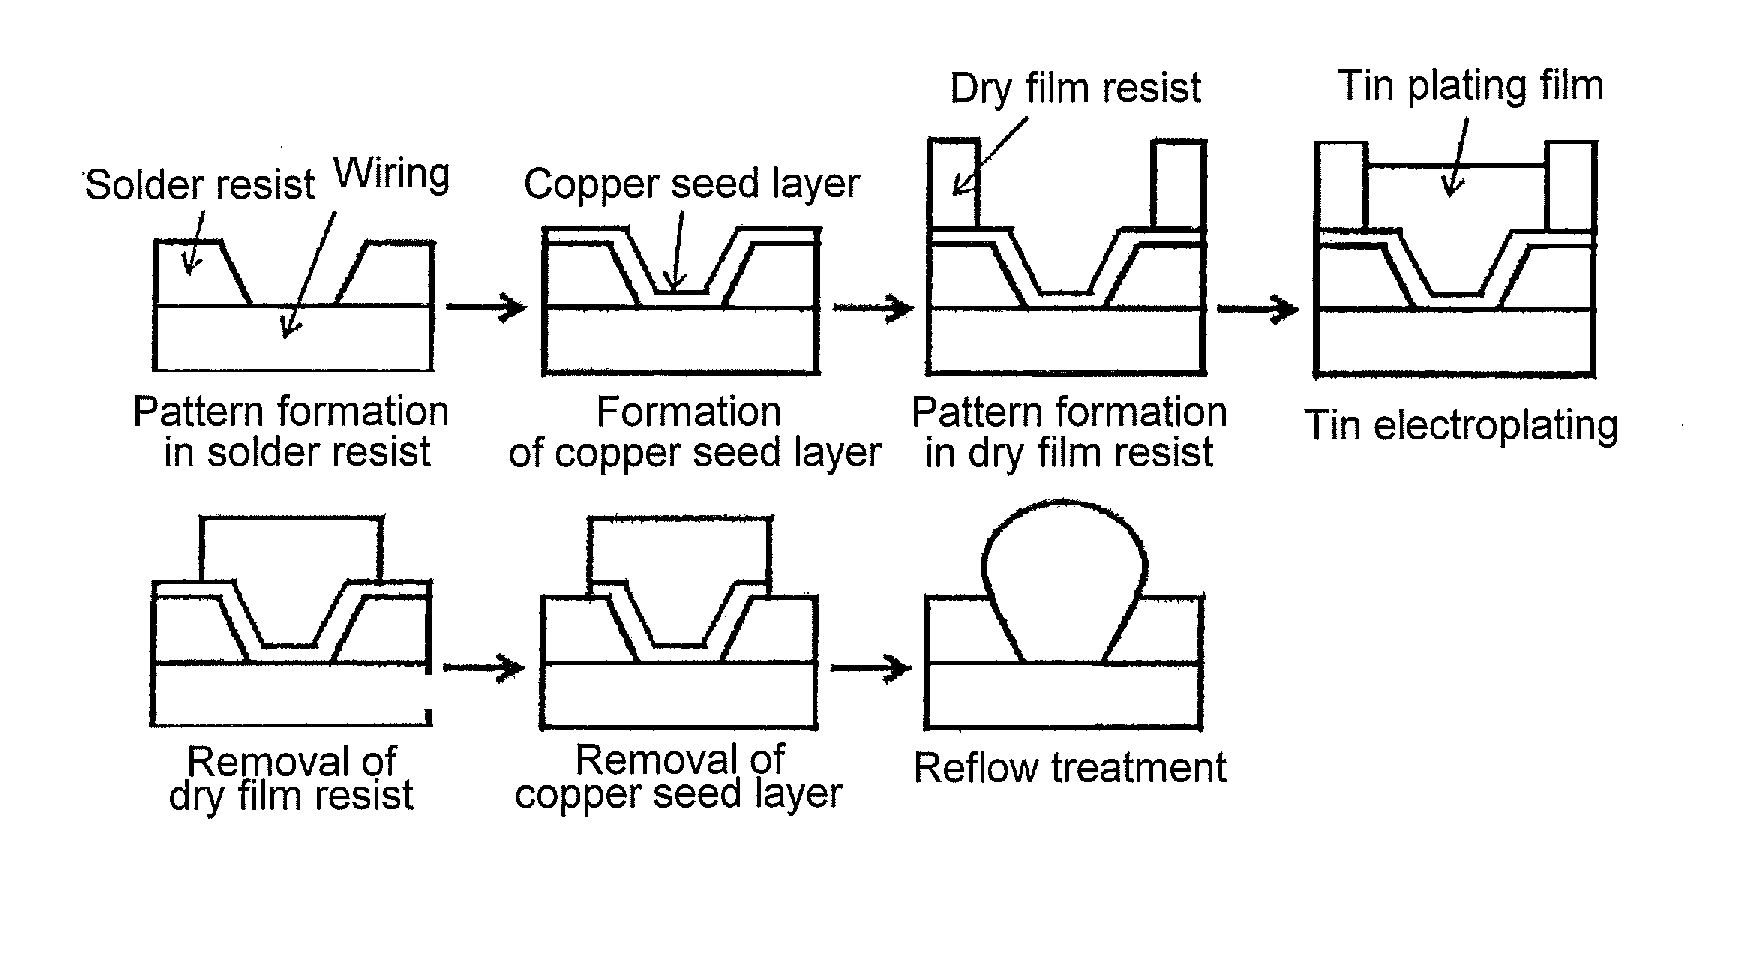 Tin or tin alloy electroplating bath and process for producing bumps using same